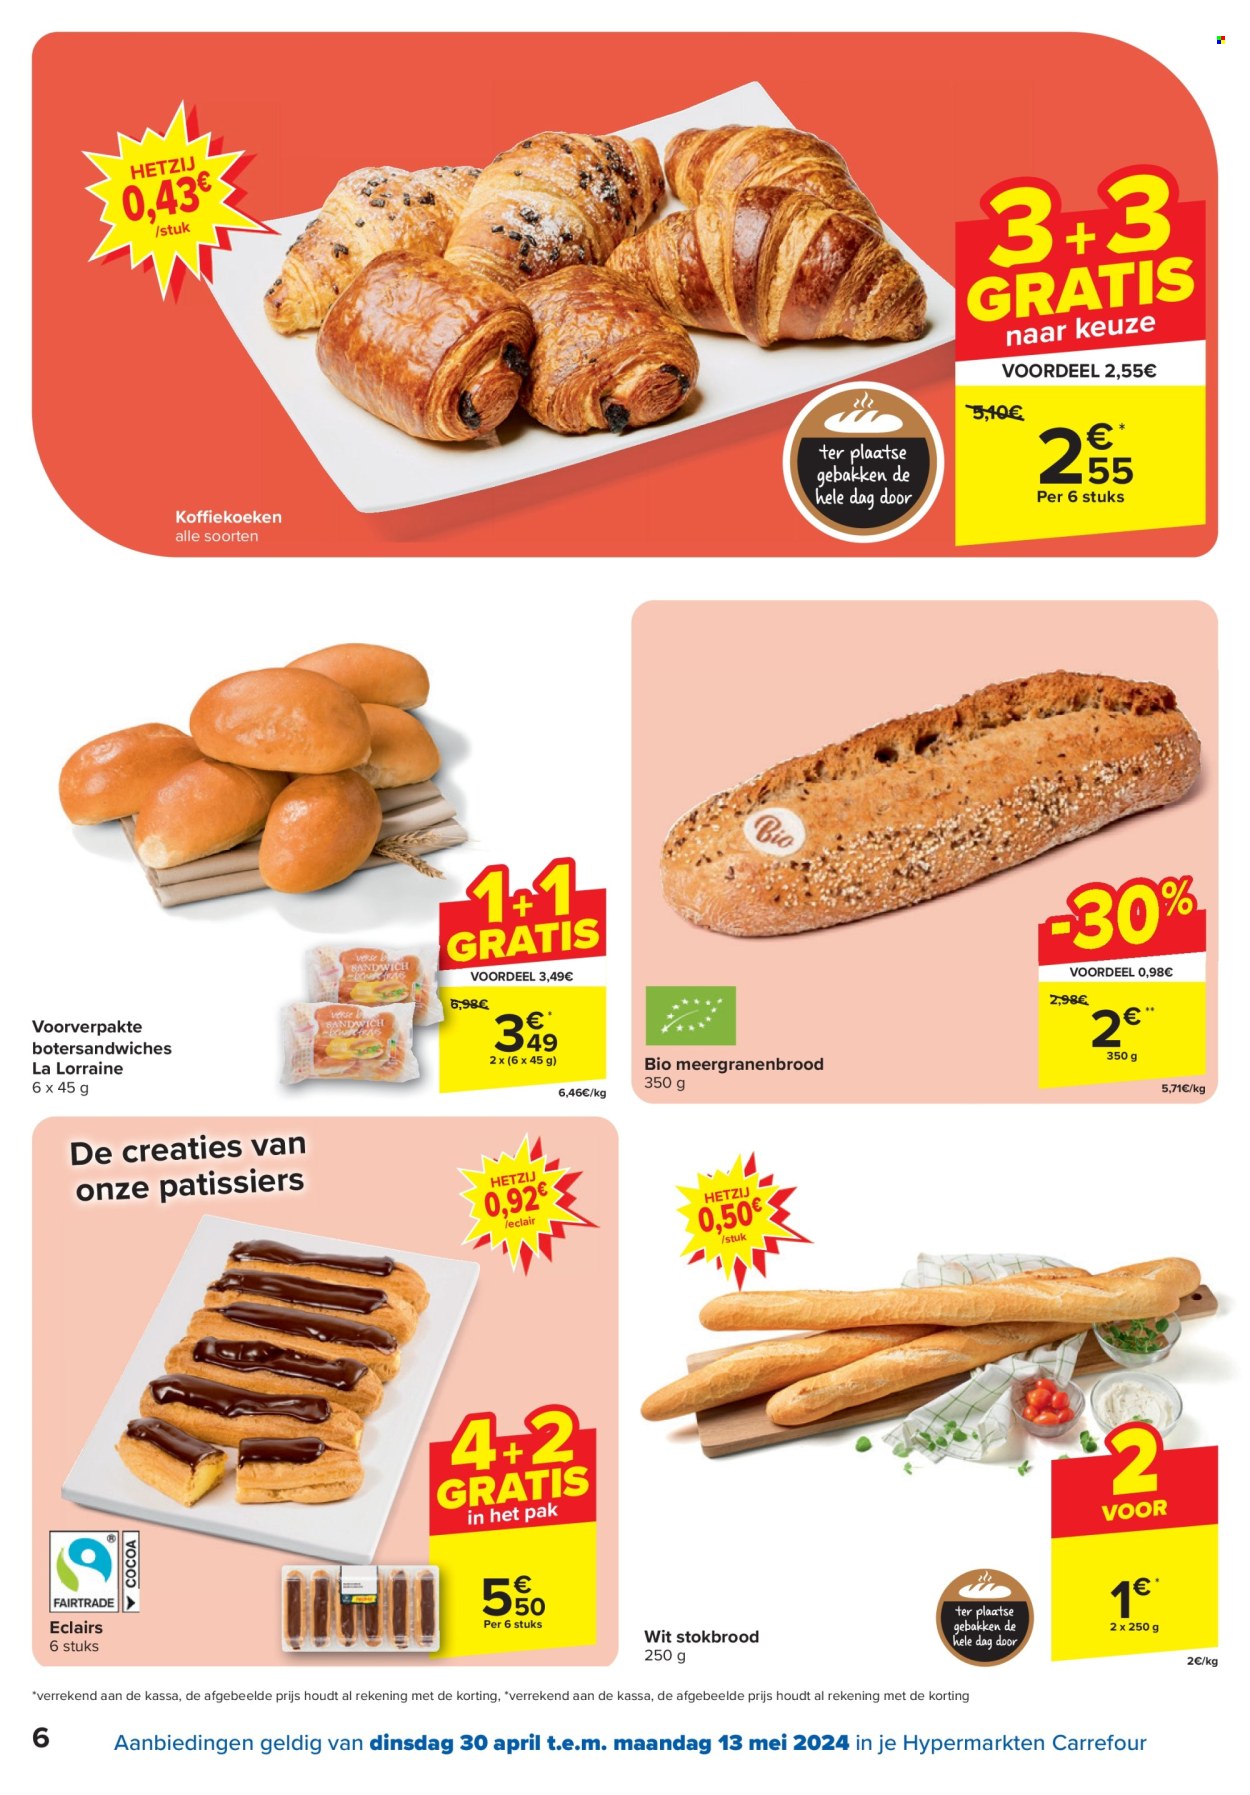 thumbnail - Carrefour hypermarkt-aanbieding - 30/04/2024 - 13/05/2024 -  producten in de aanbieding - meergranenbrood, stokbrood, brood, éclairs, sandwich, koekjes. Pagina 6.